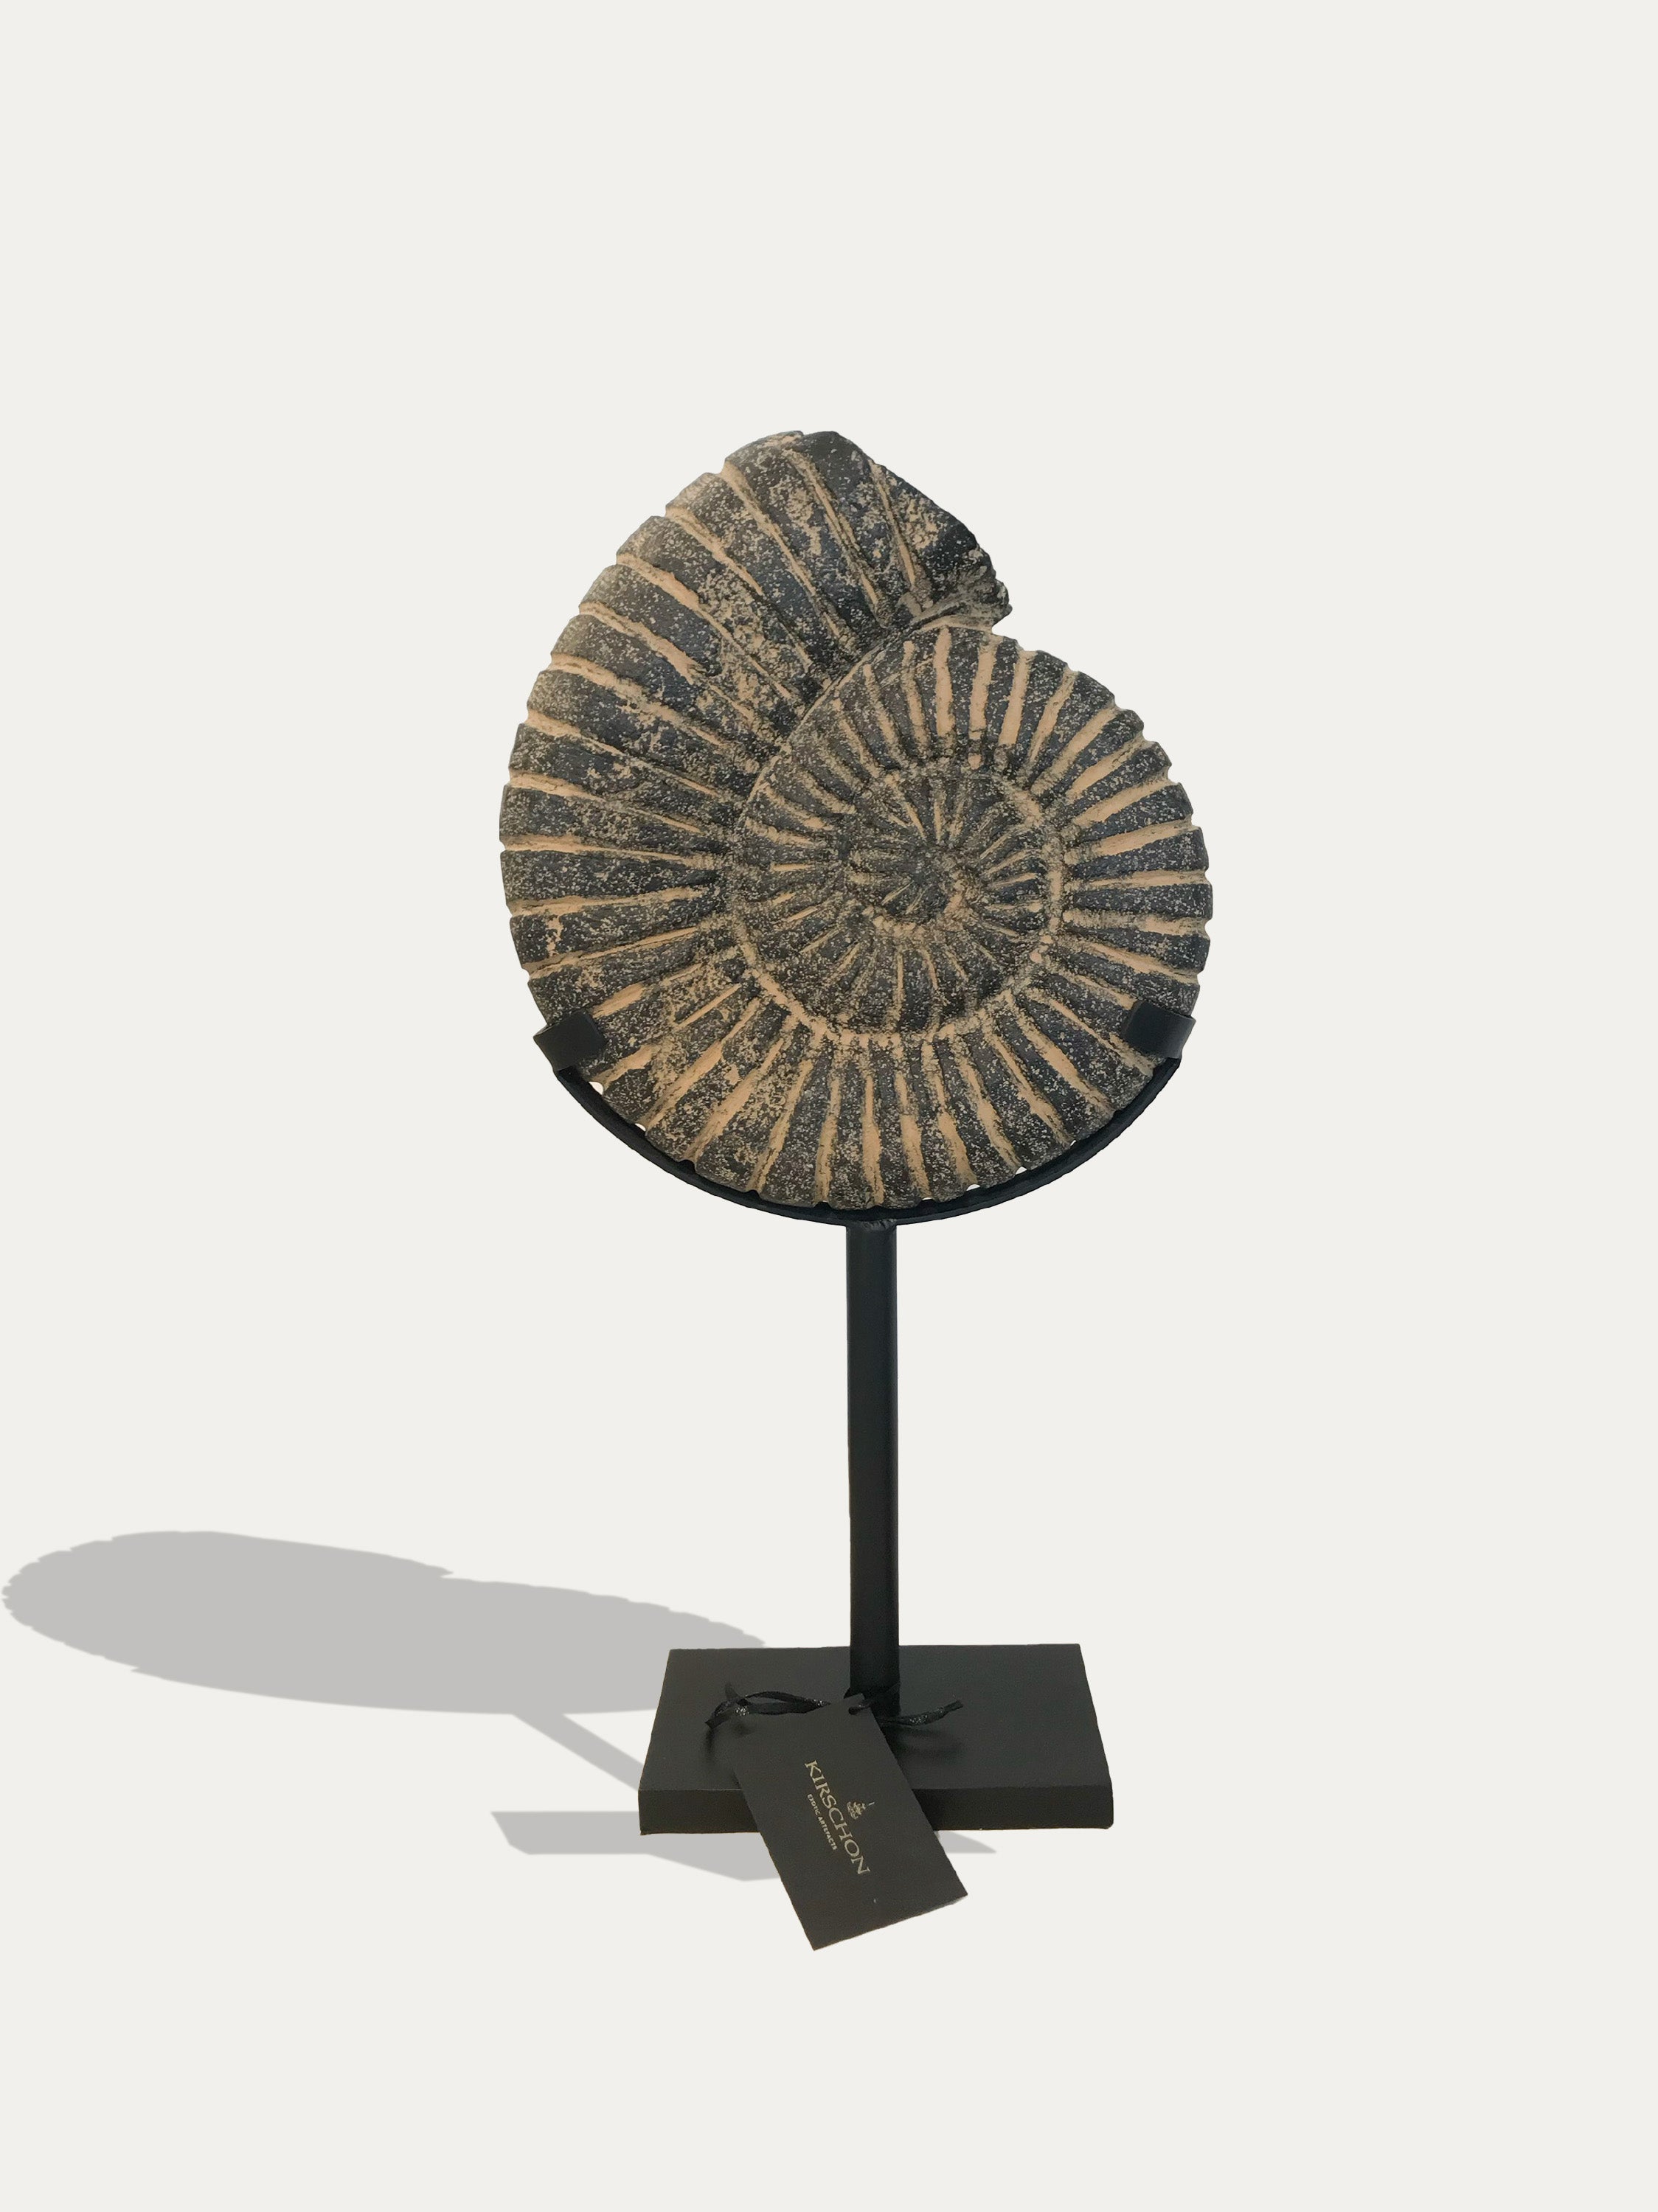 Black Ammonite stone statue from Java